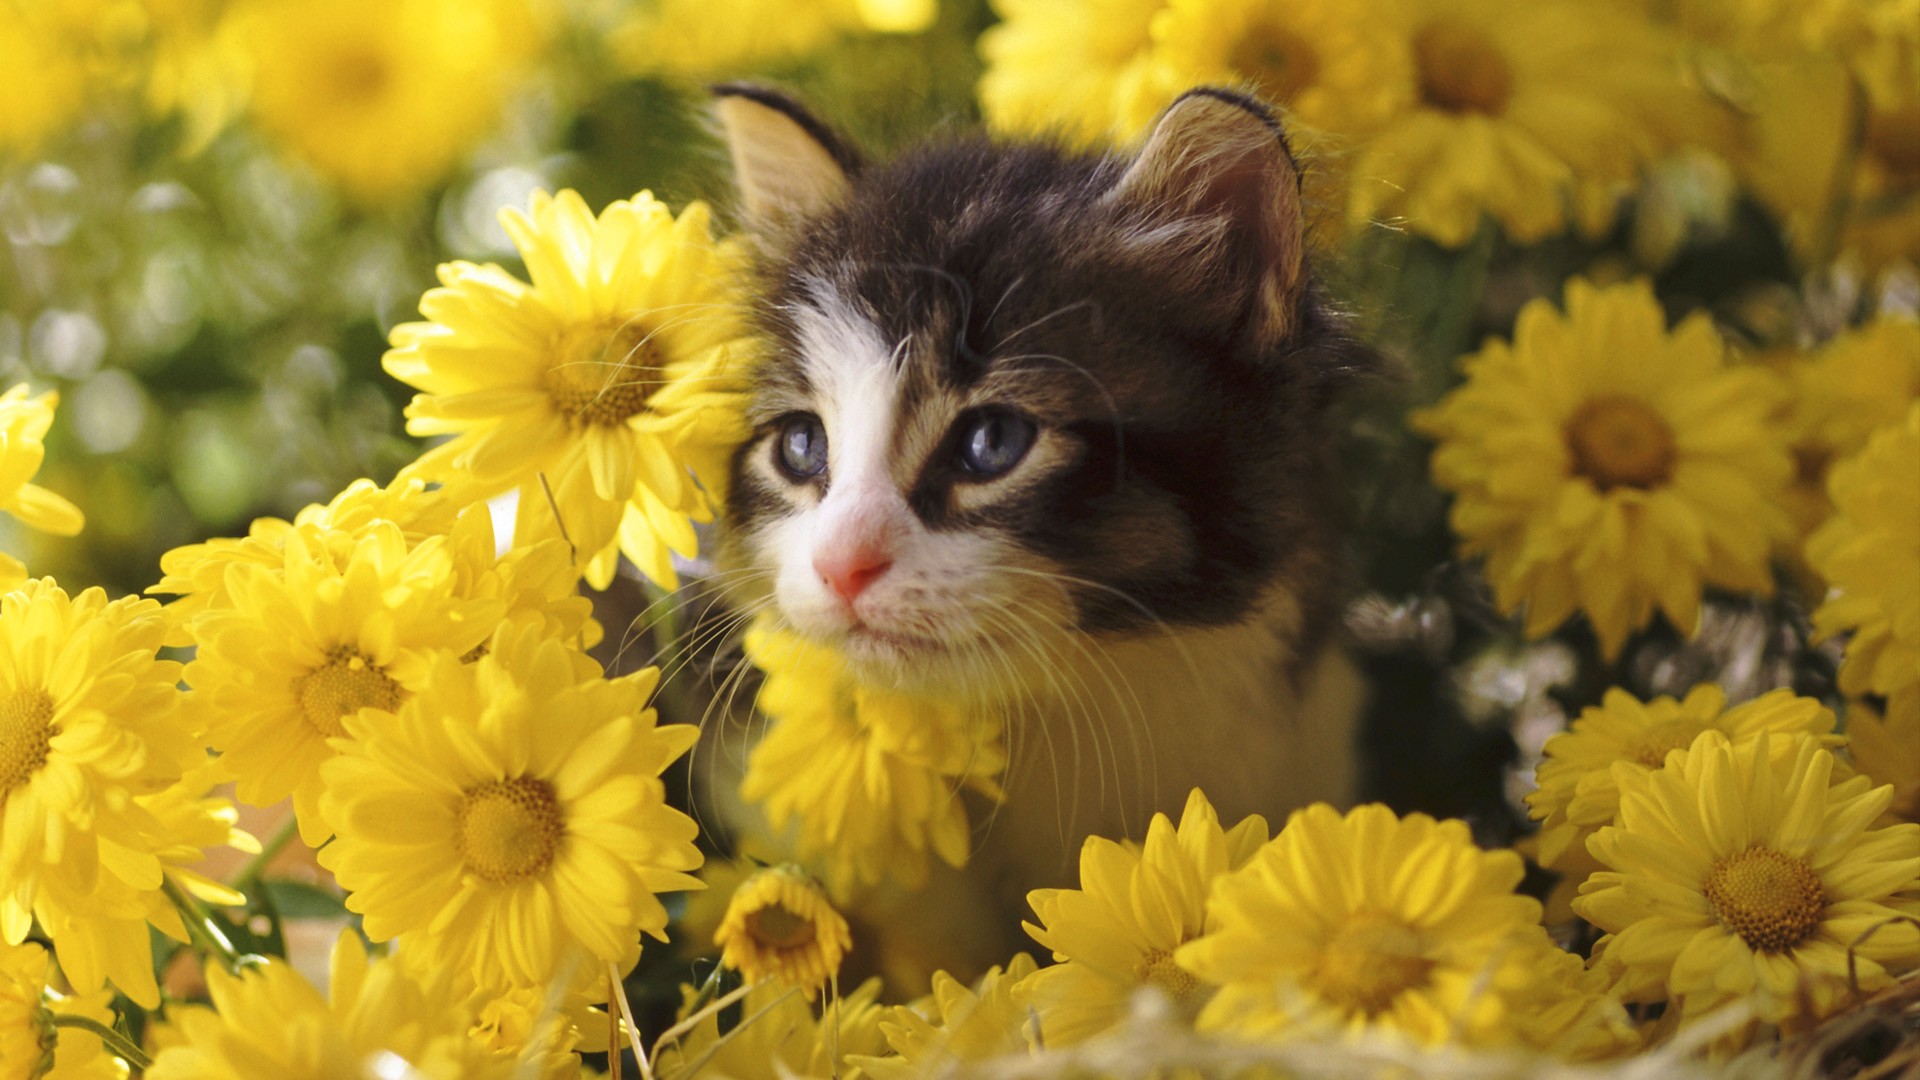 flowers, cats, kittens - desktop wallpaper